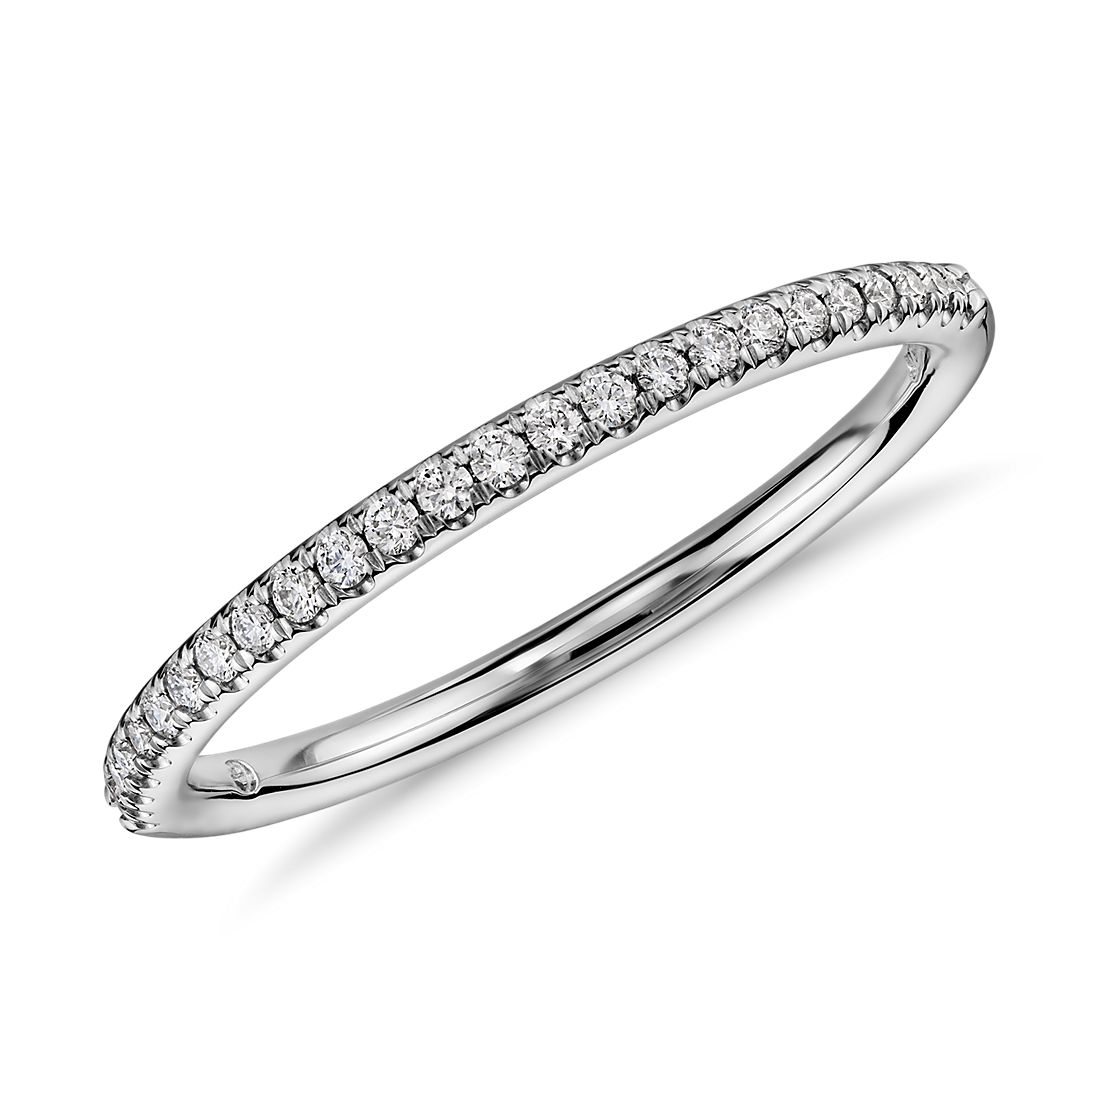 Petite Micropavé Diamond Ring in 14k White Gold